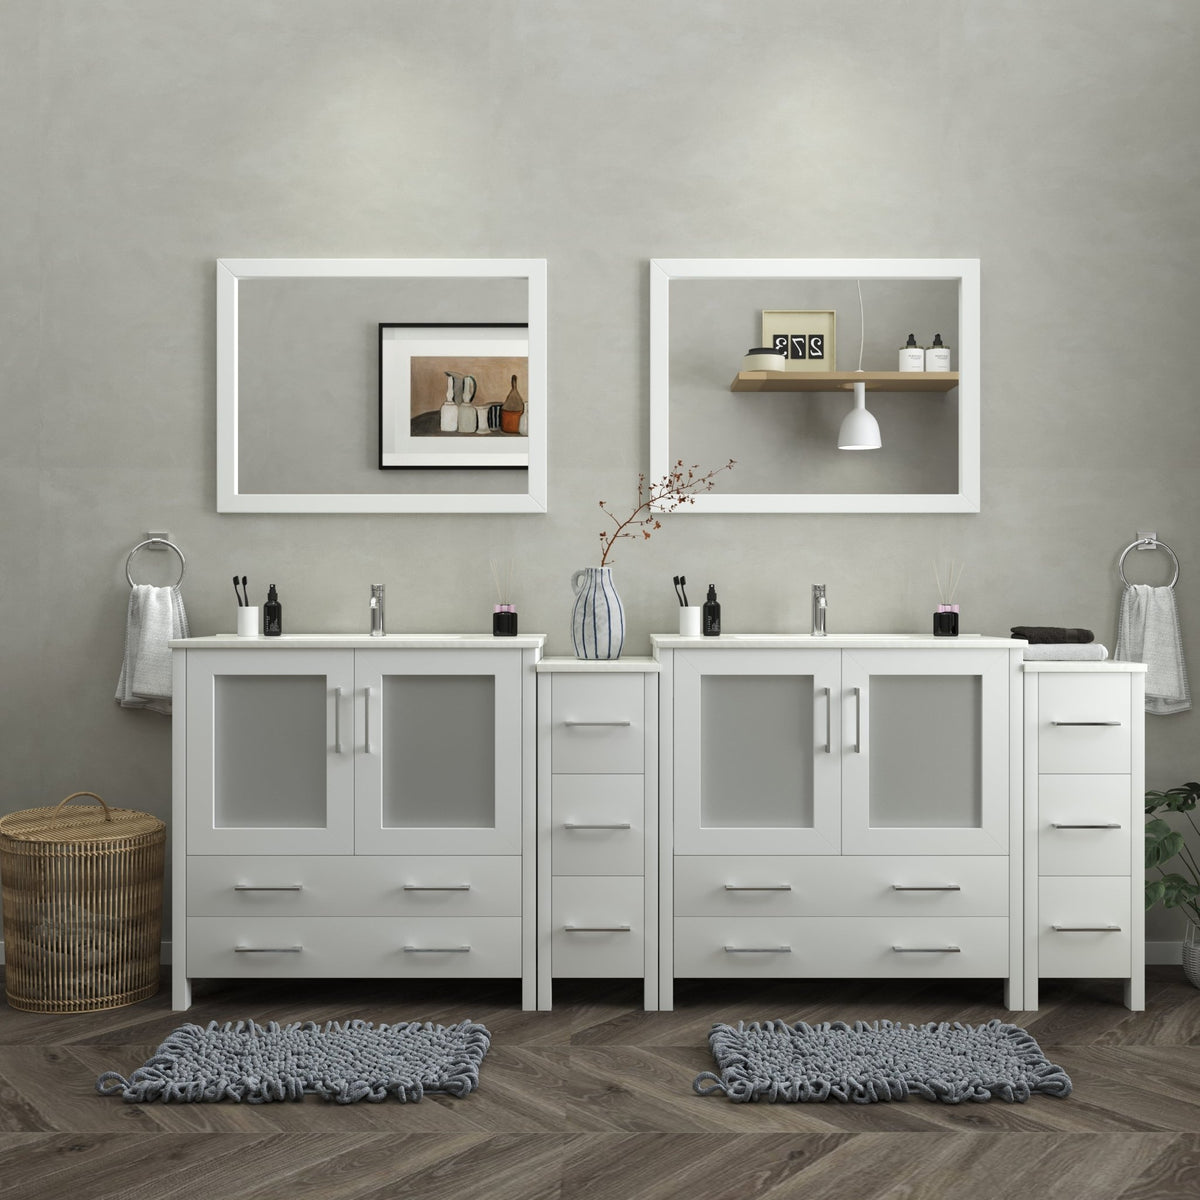 Vanity Art VA3036-96B 96 inch Double Sink Bathroom Vanity Set with Ceramic Vanity Top with Soft Closing Doors and Drawers - Blue